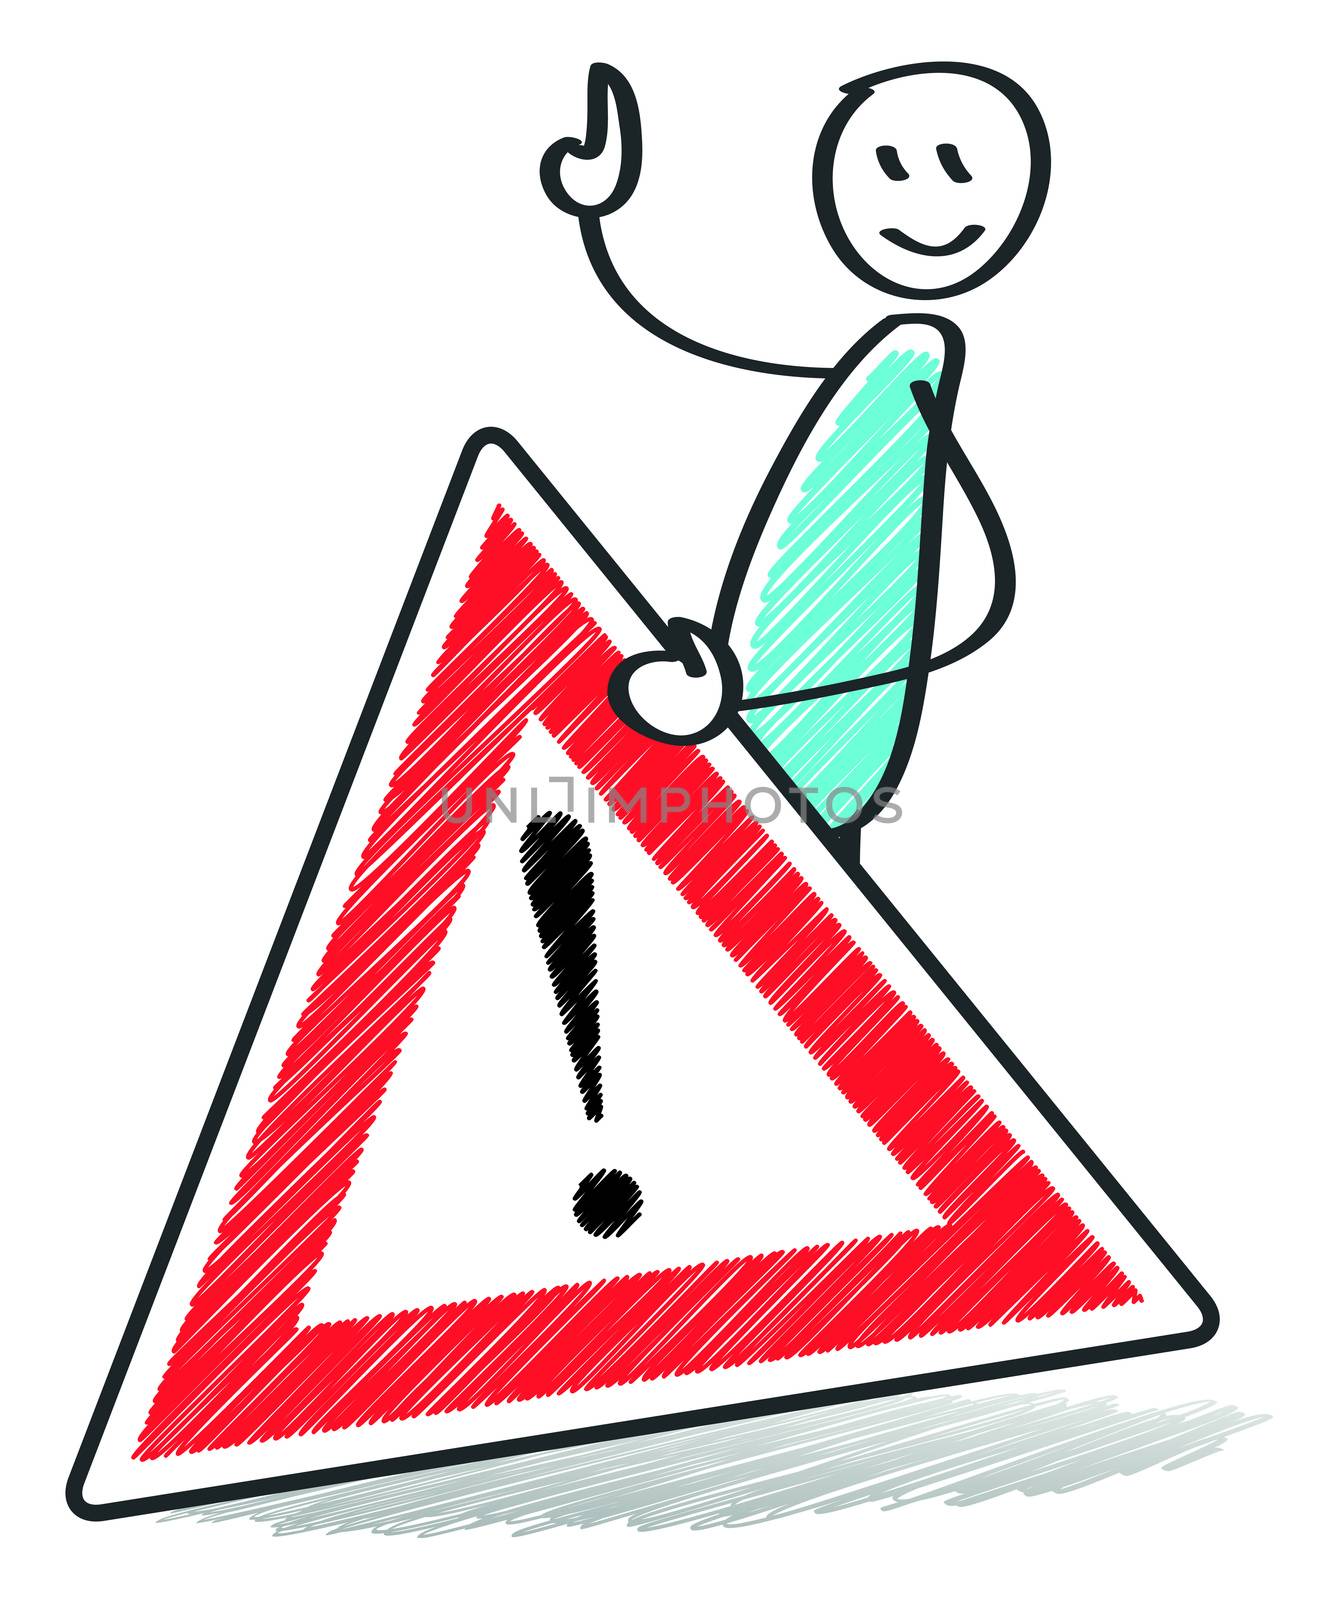 warning sign by magann